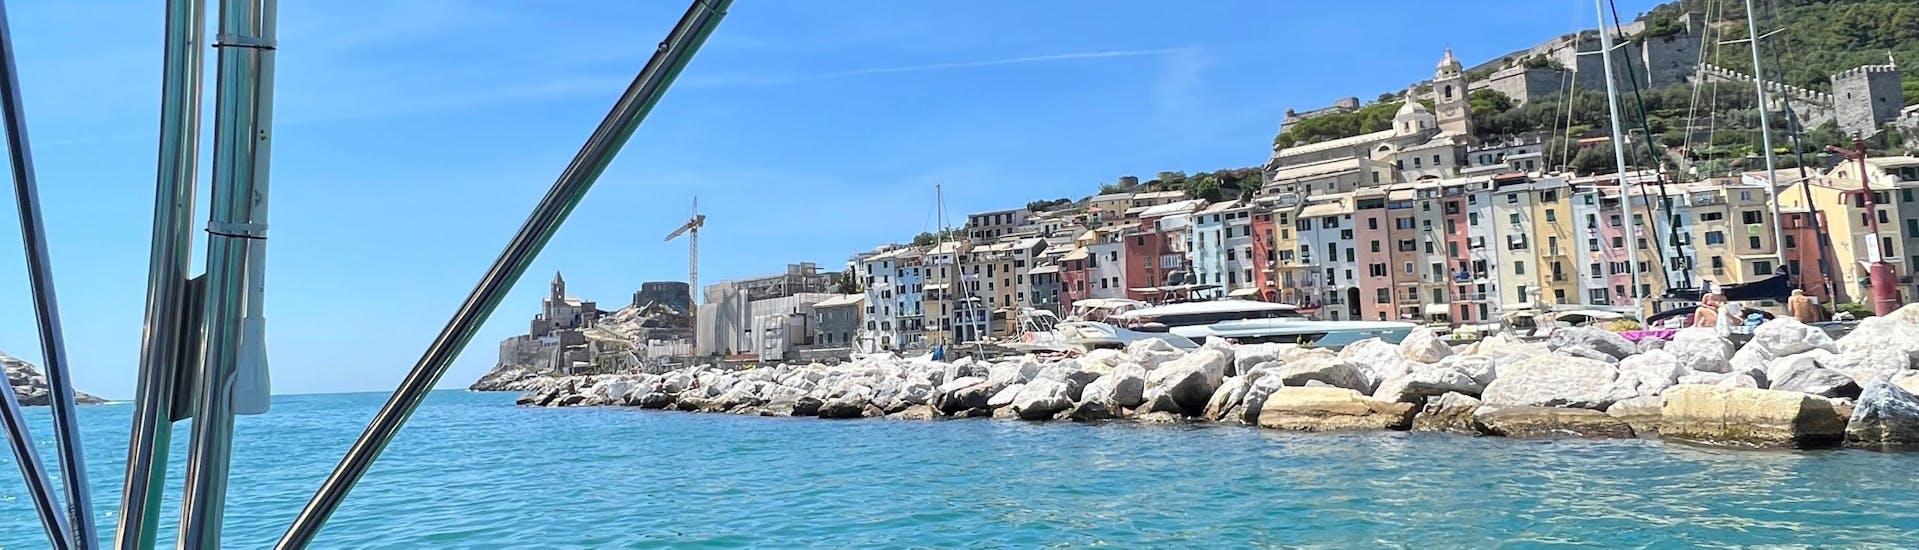 The view you can admire during the Private Boat Trip from La Spezia to Cinque Terre with Stop in Porto Venere with Maestrale Boat Tour Cinque Terre.